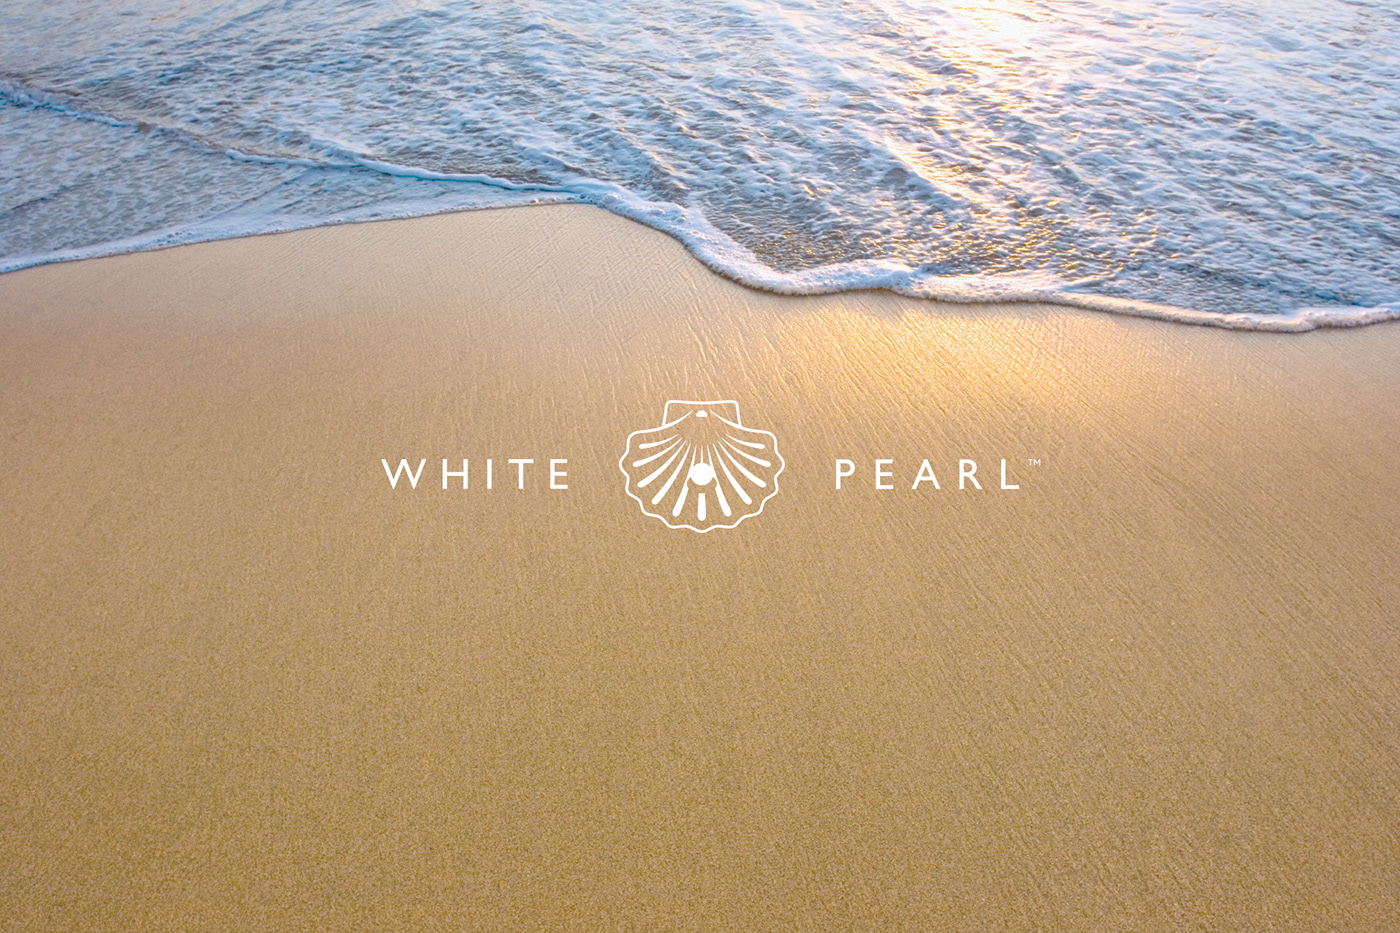 Luxury beach resort mozambique pearl Ponta Mamoli redt White Pearl Resorts